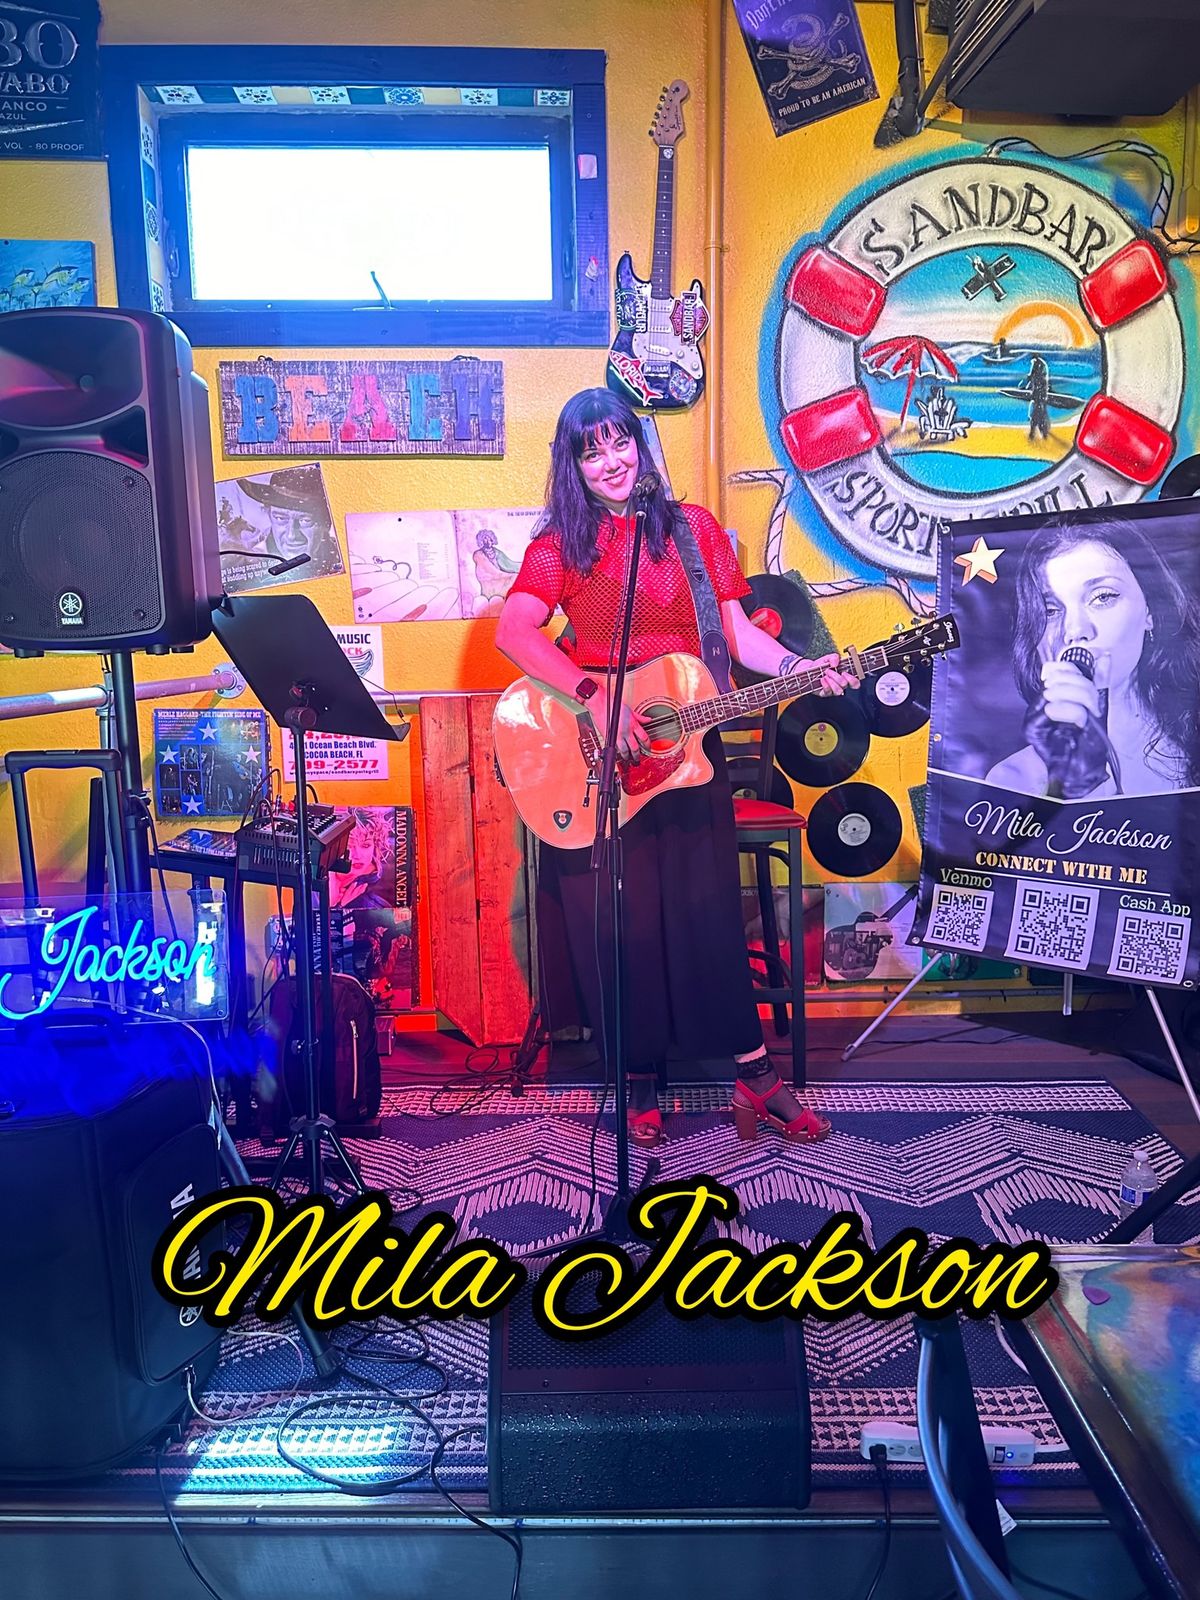 Mila Jackson Sandbar Sunday